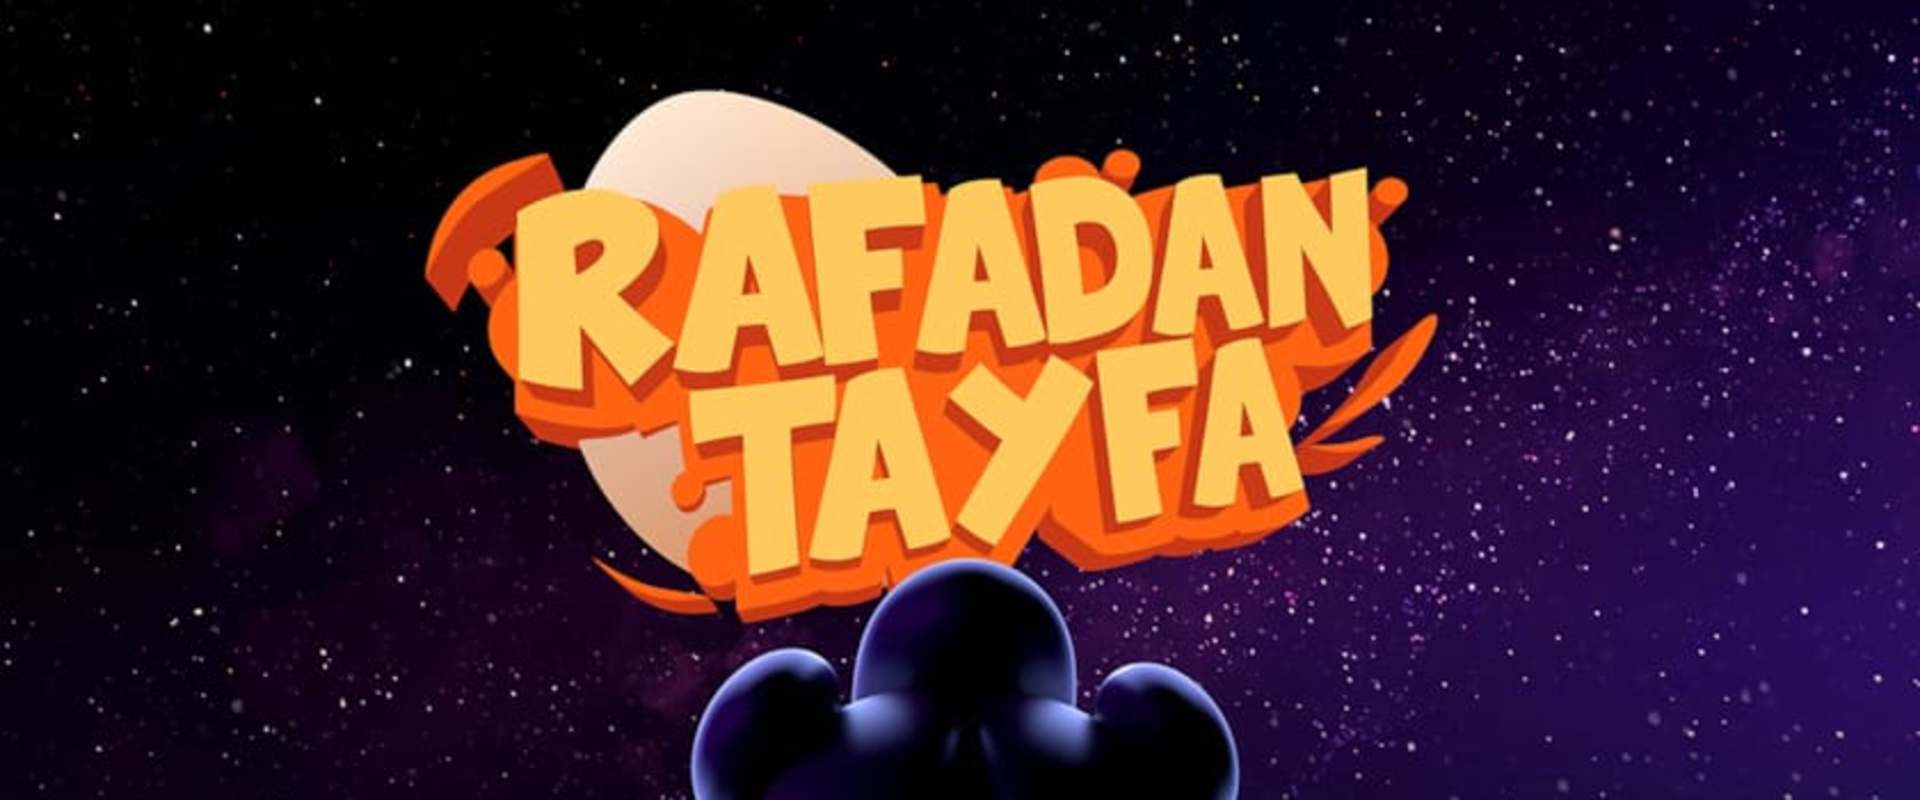 Rafadan Tayfa: Galaktik Tayfa background 2